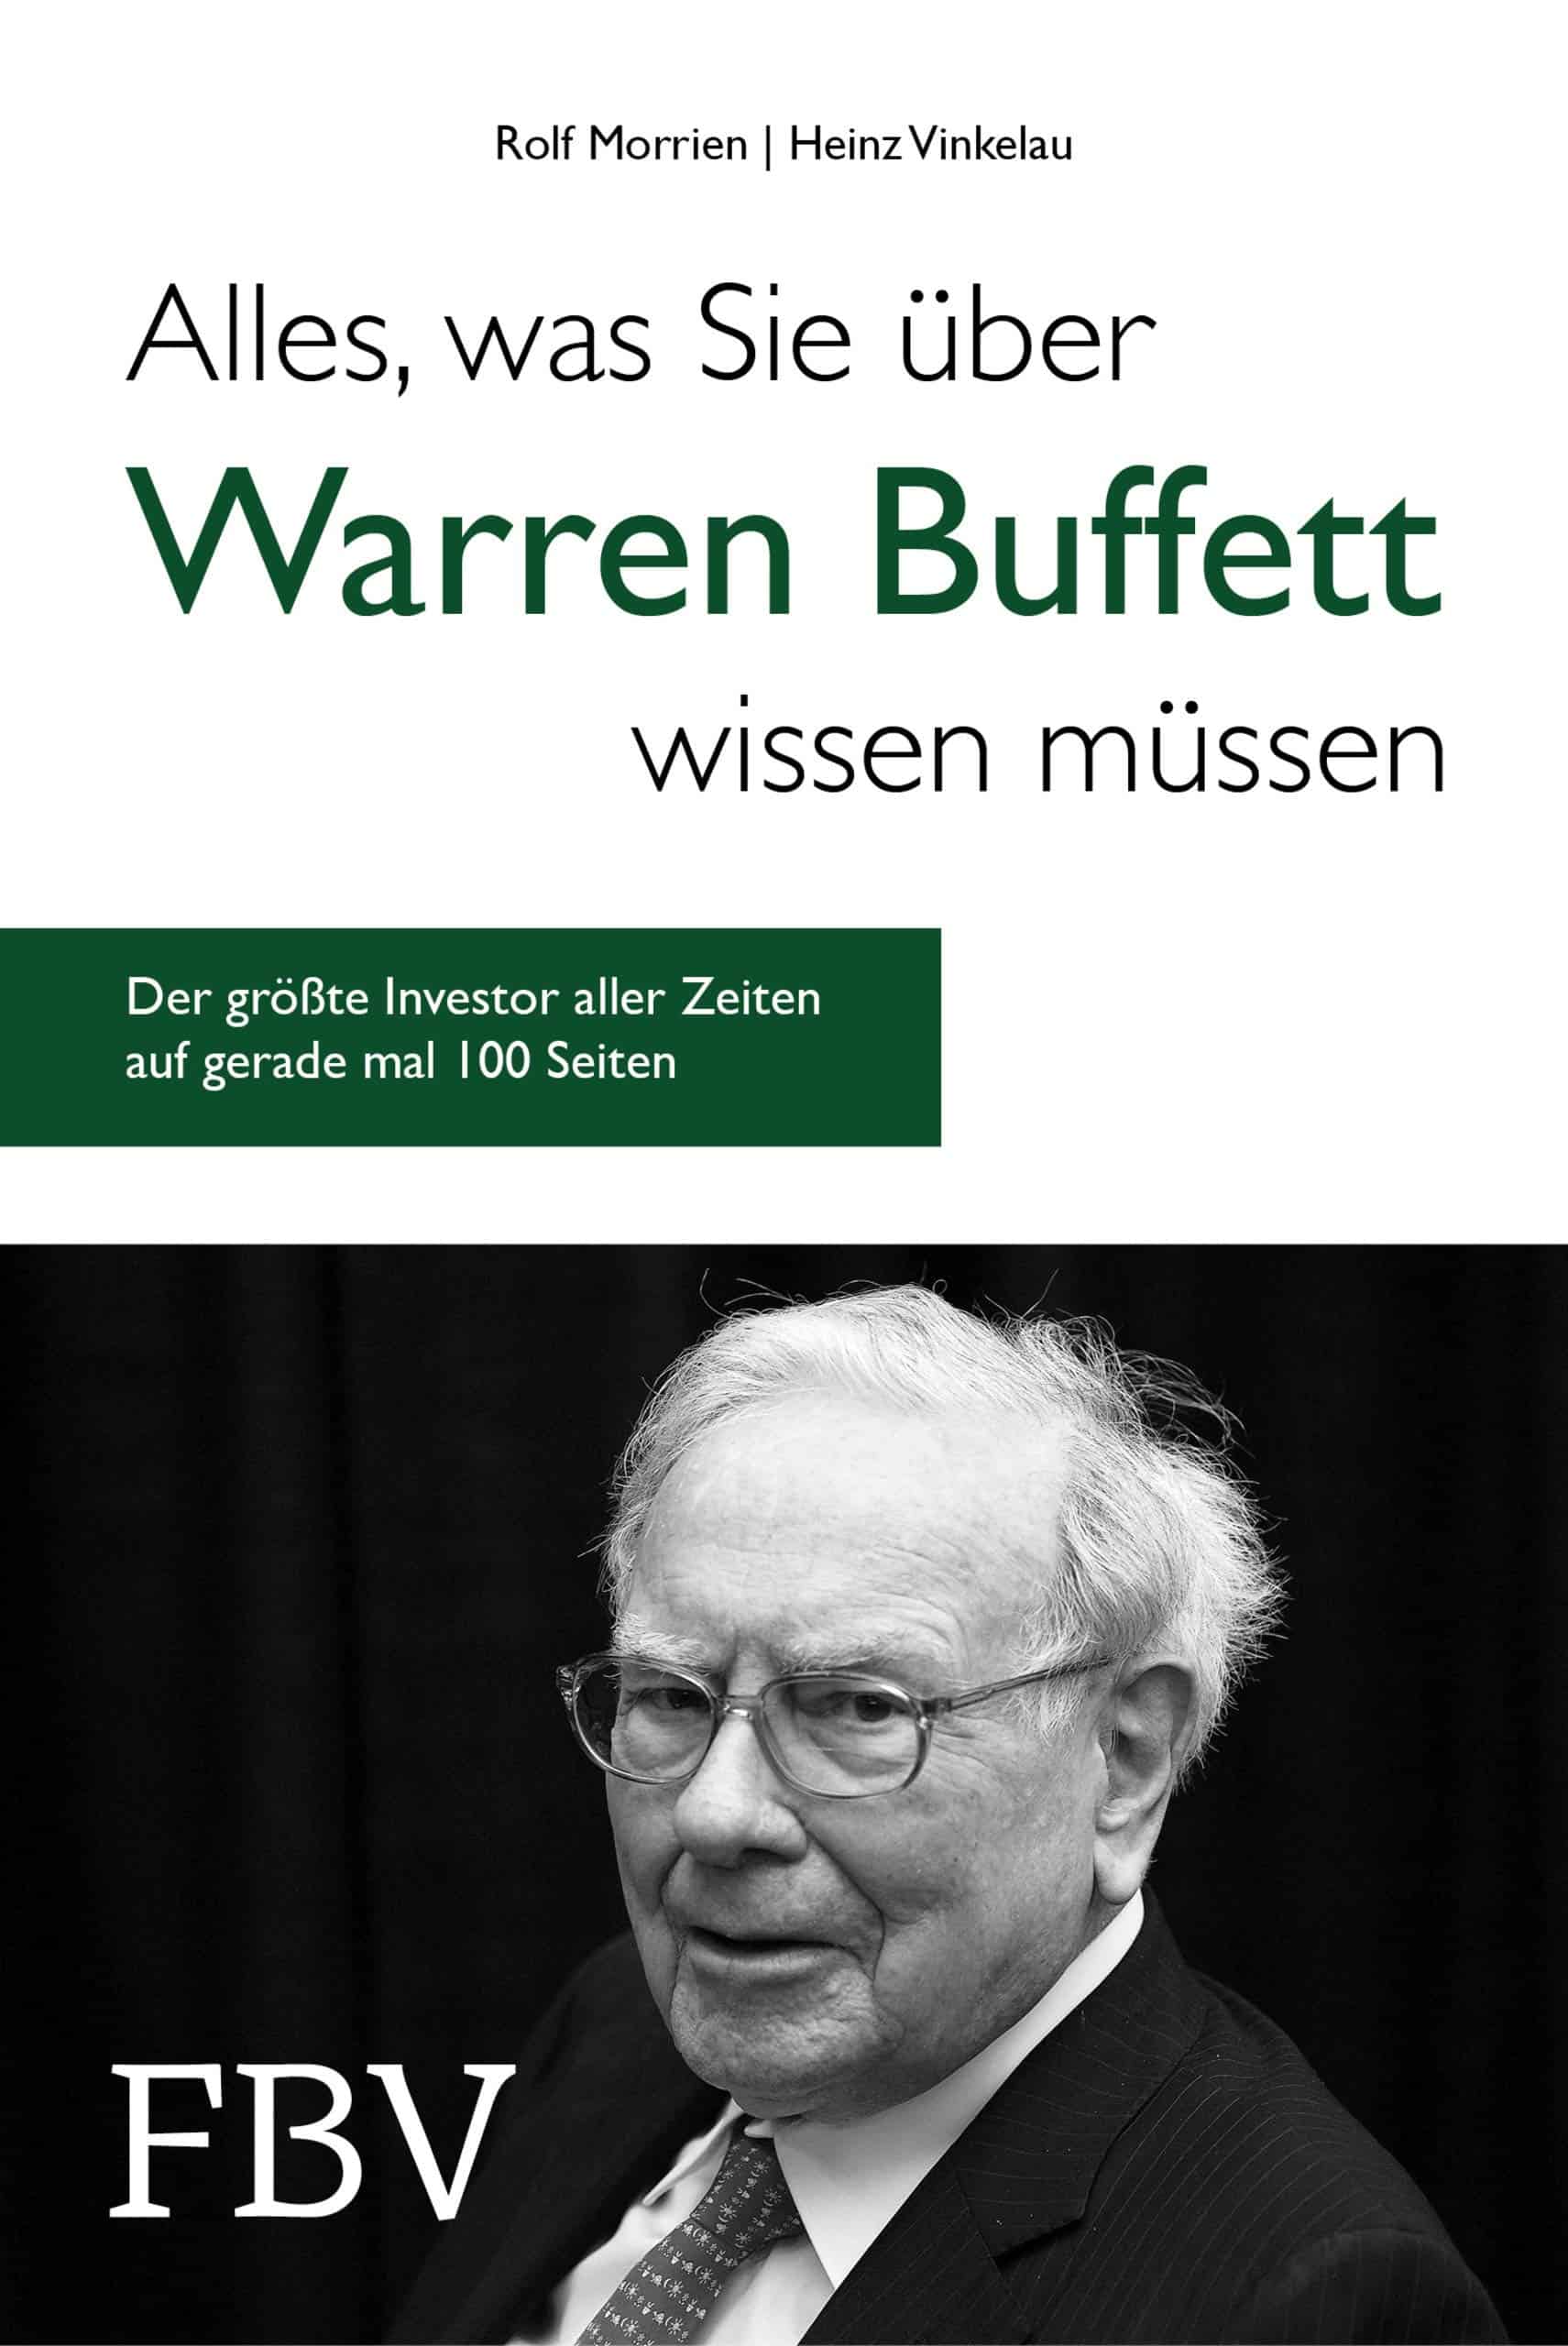 Alles_über_Warren_Buffett